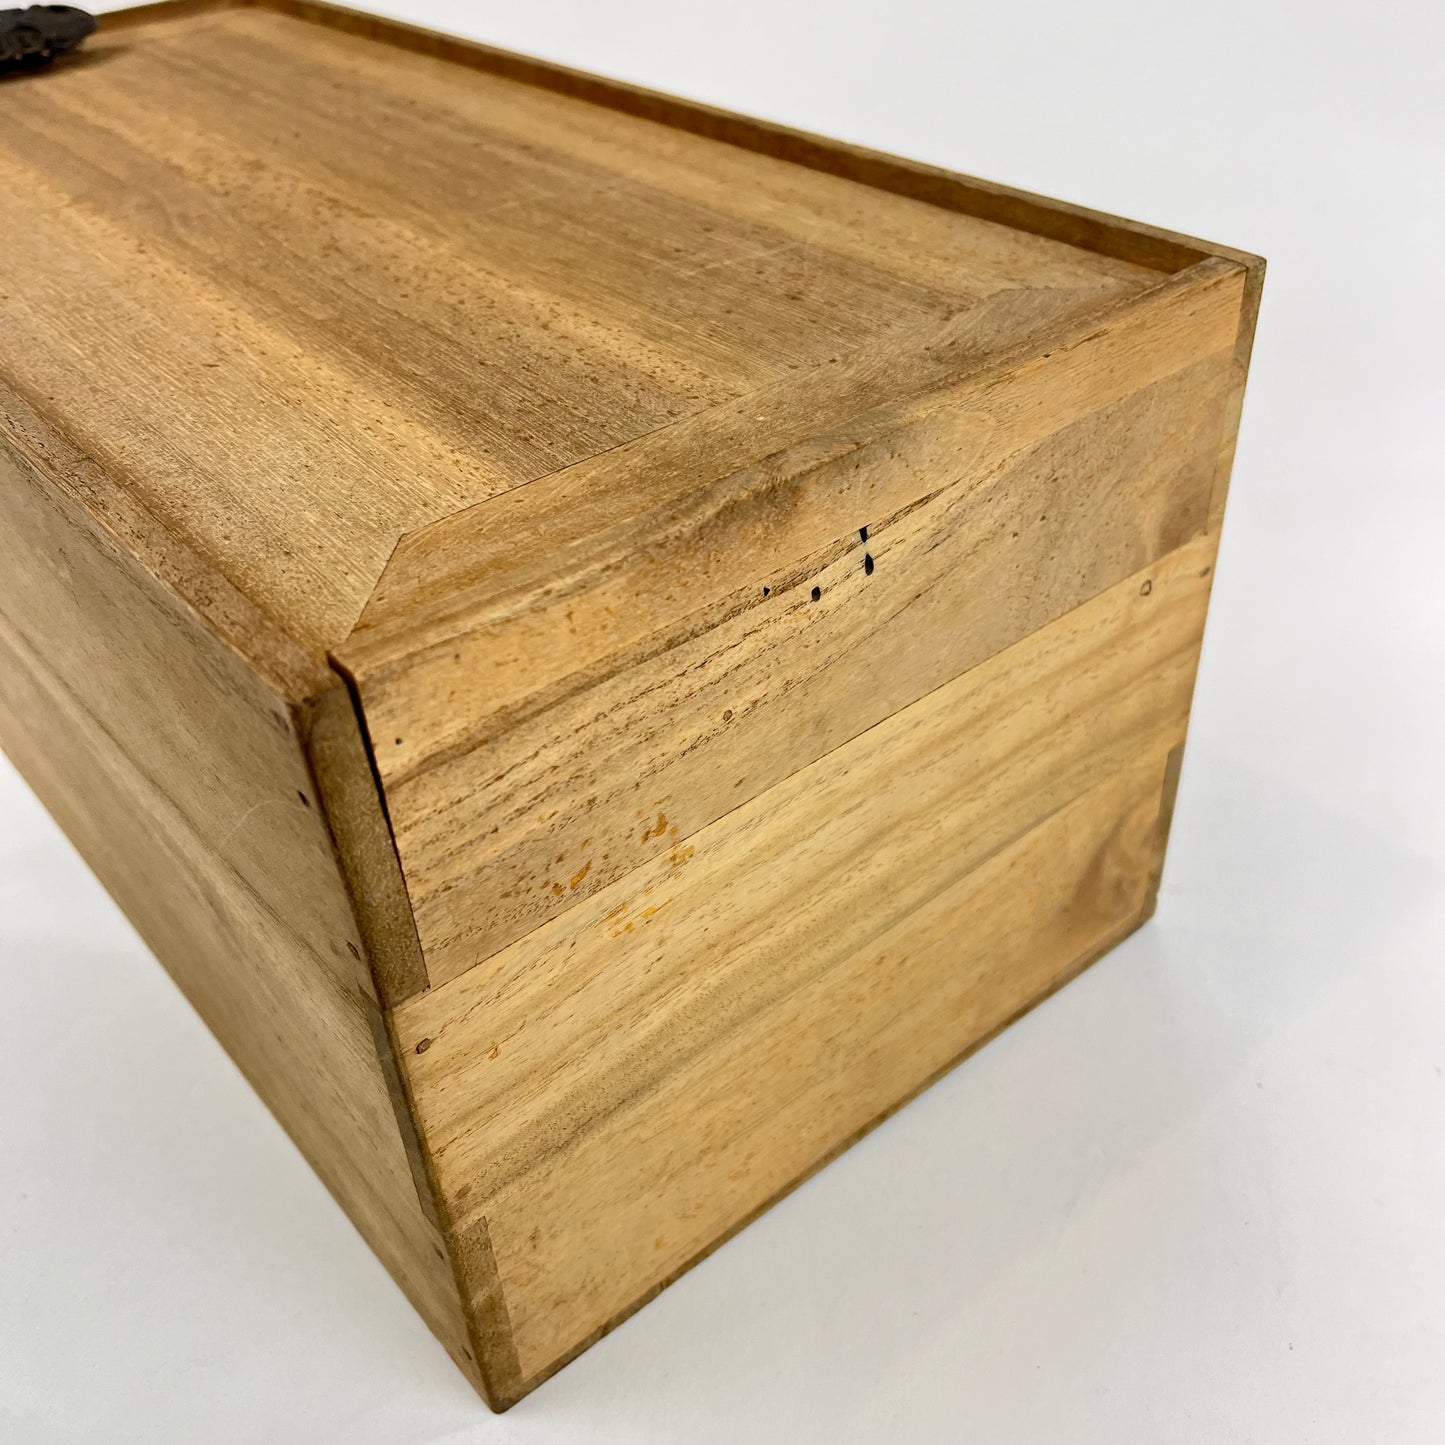 Japanese Chabako Tea Ceraminy Traval Kiri Wood Box W/ Bat Lock 4X4x12"